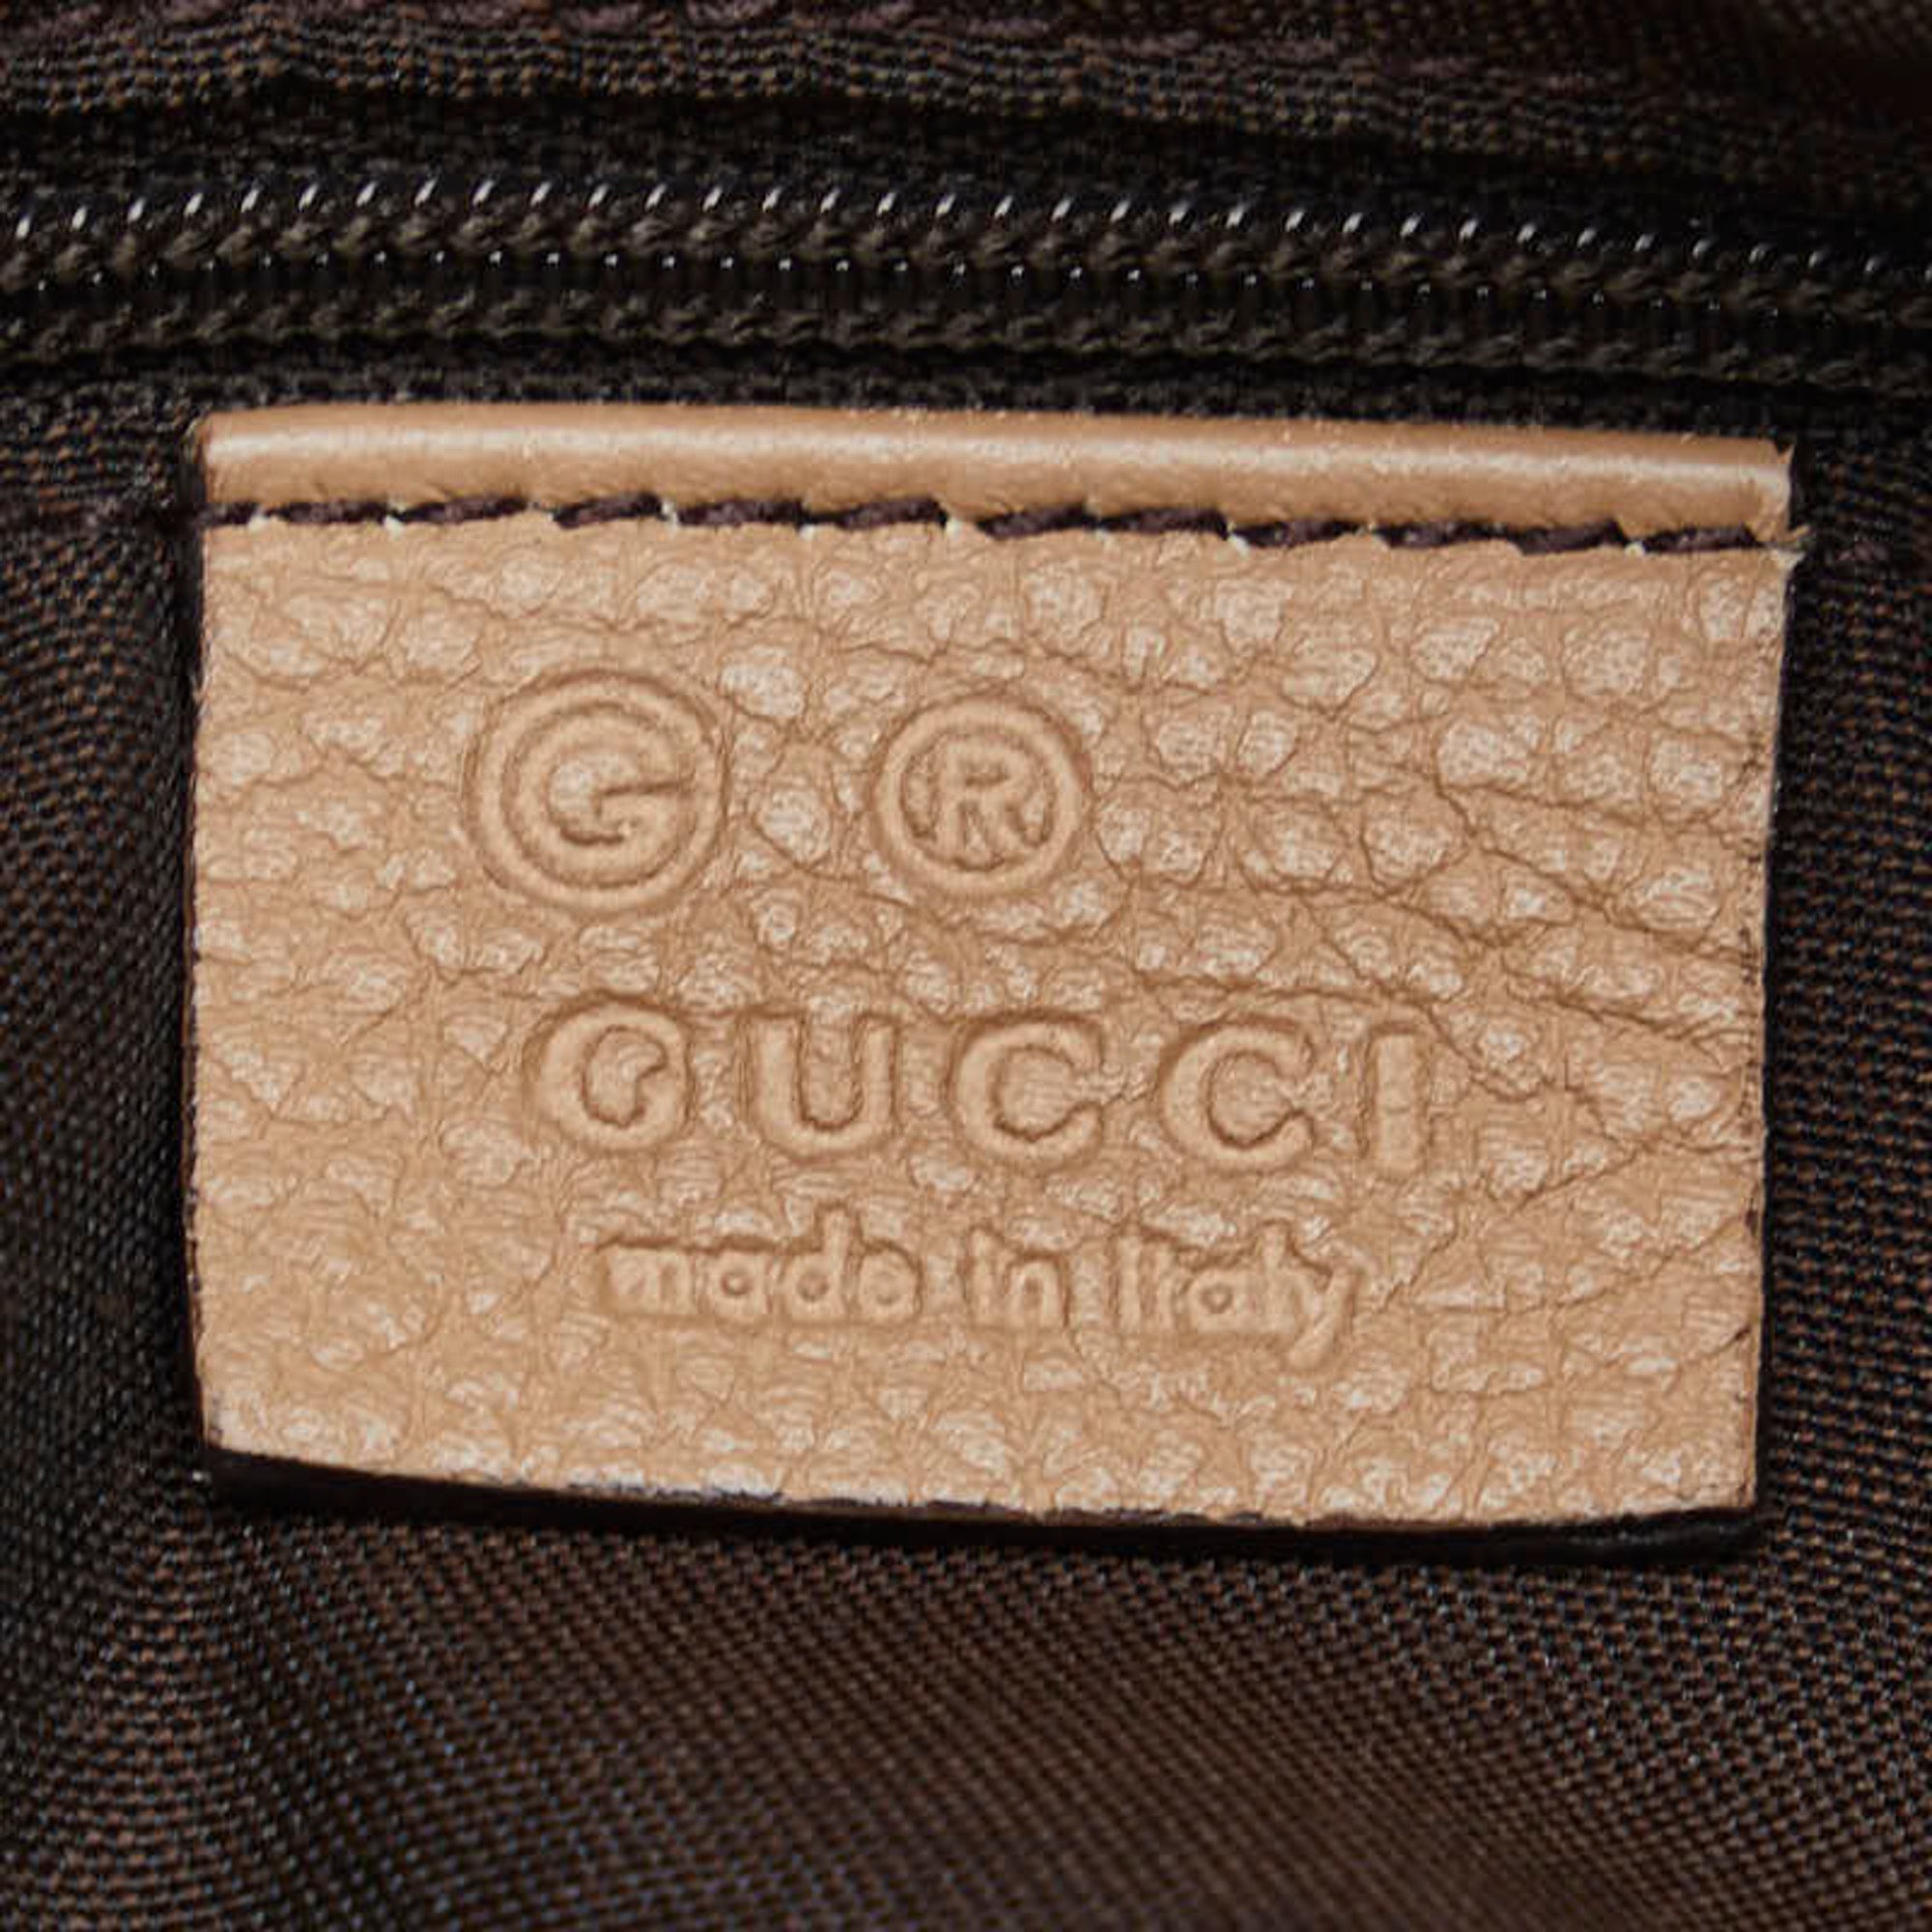 Gucci Interlocking G Shoulder Bag 339553 Beige Leather Women's GUCCI